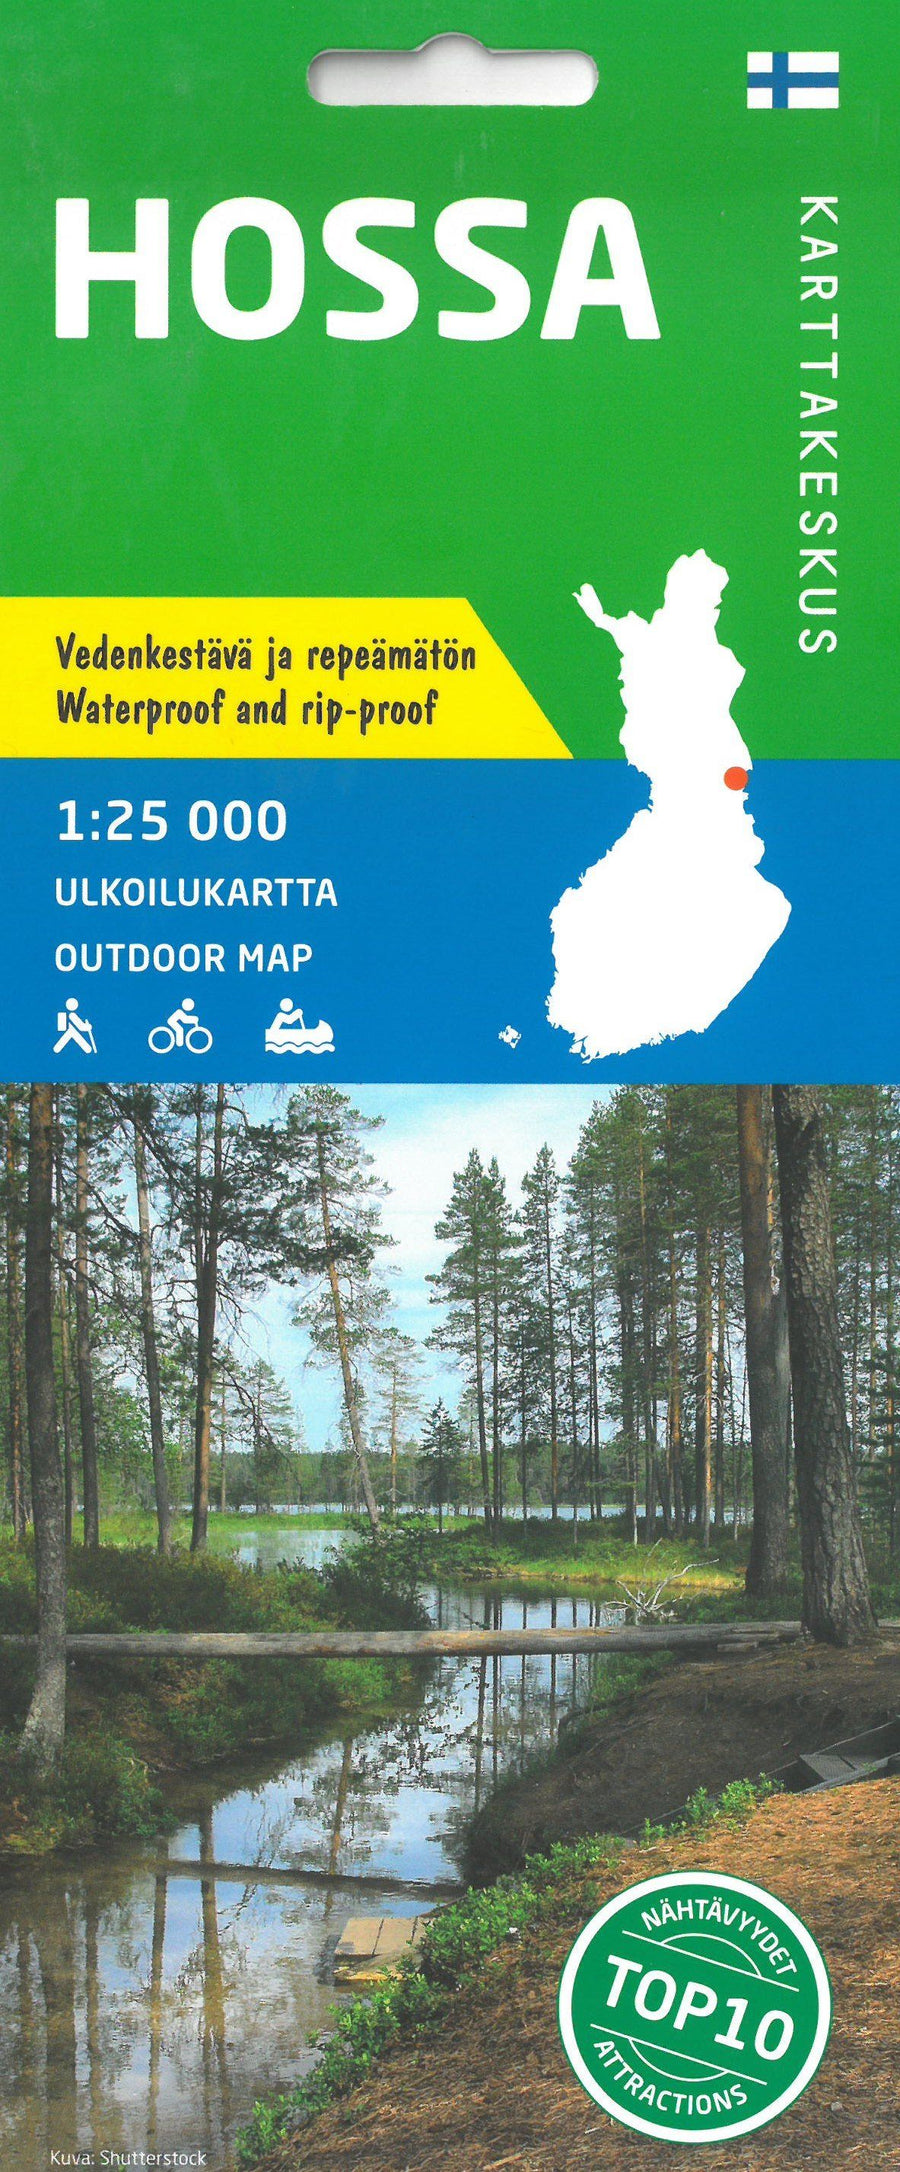 Carte de plein air n° 06 - Hossa (Finlande) | Karttakeskus carte pliée Karttakeskus 